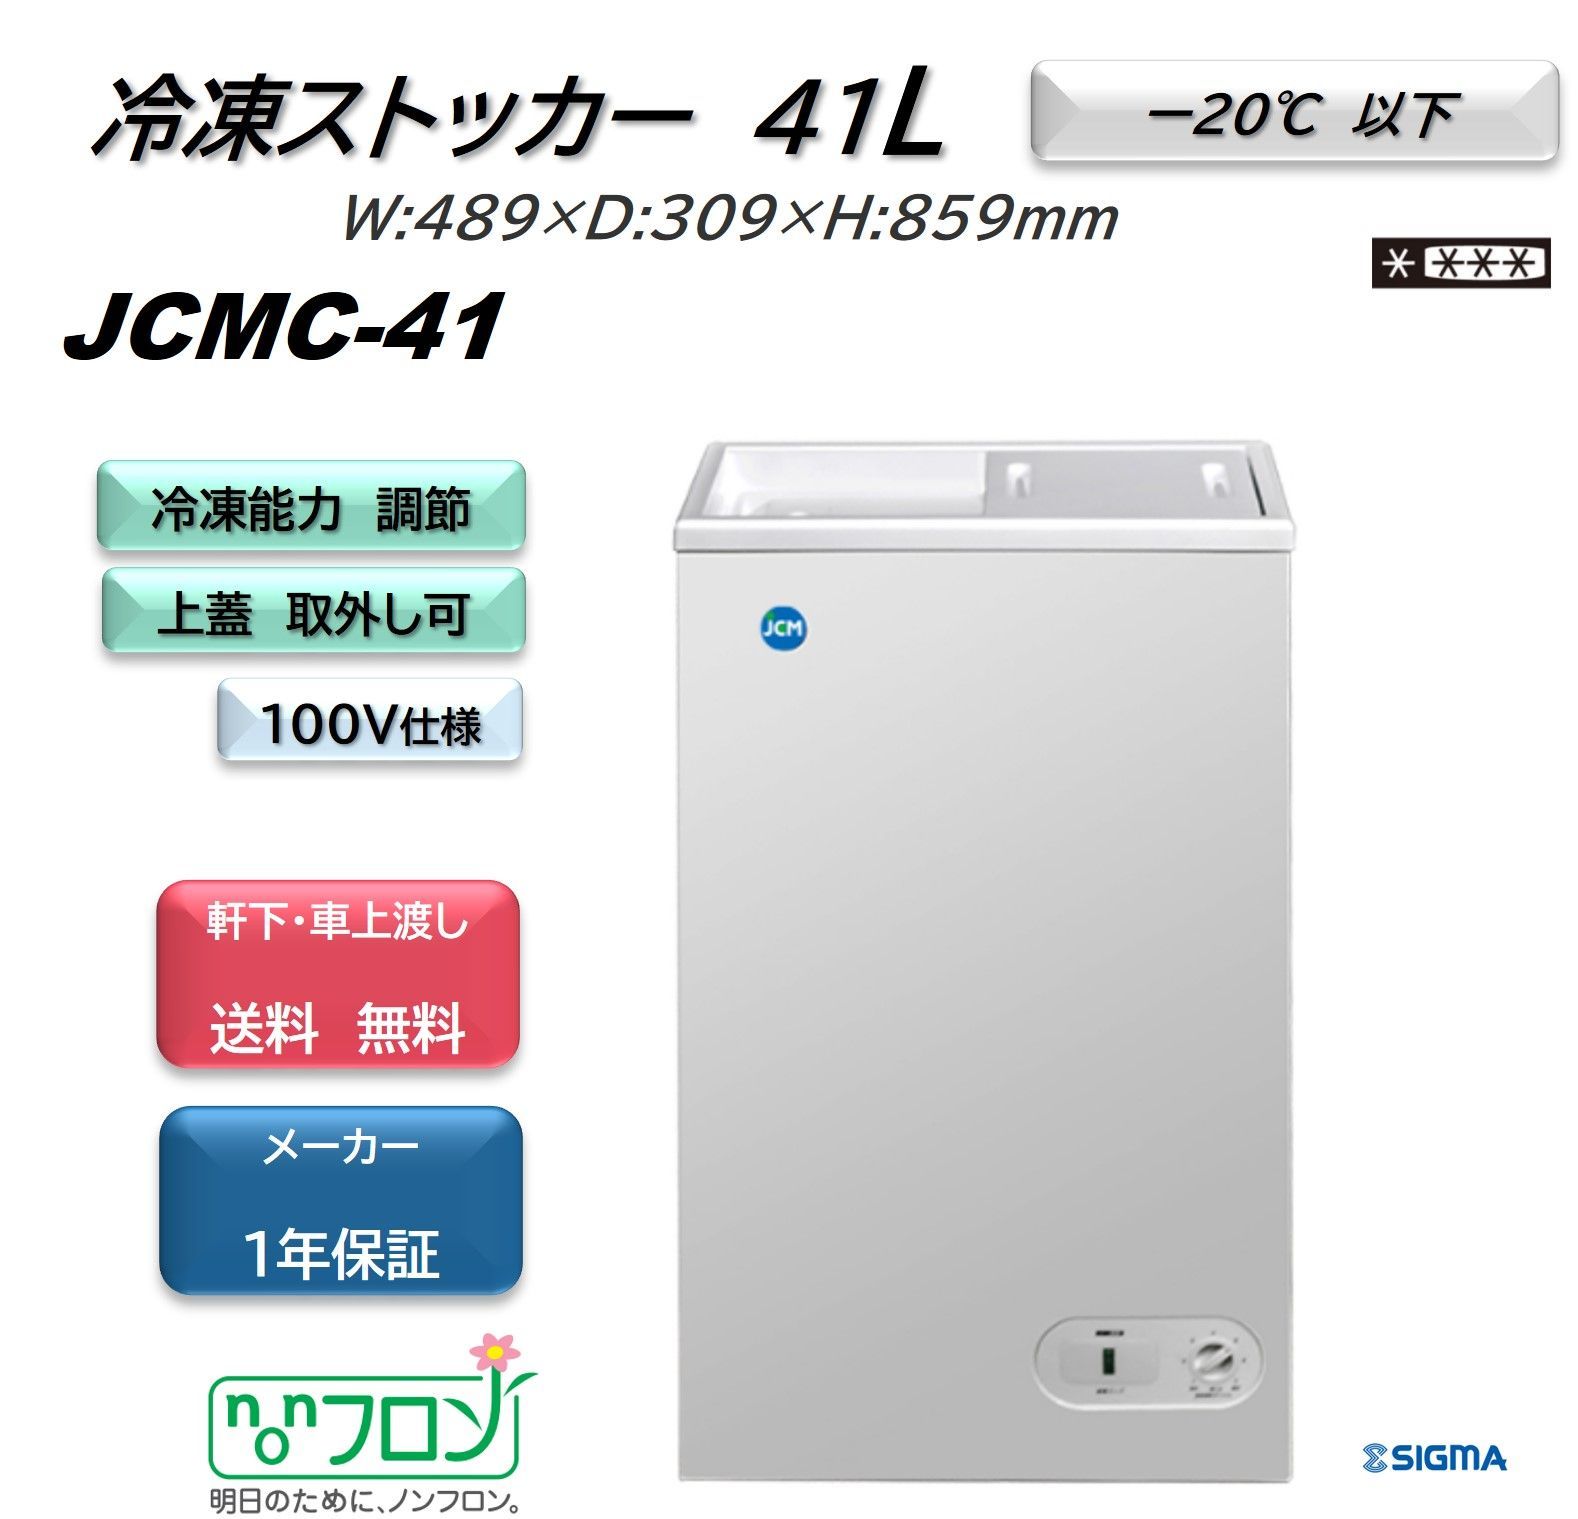 2022モデル 業務用 JCM JCMC-41 冷凍庫ストッカー 冷凍庫 産業用冷凍庫 冷凍食品 小型冷凍庫 新品 隙間用に便利 